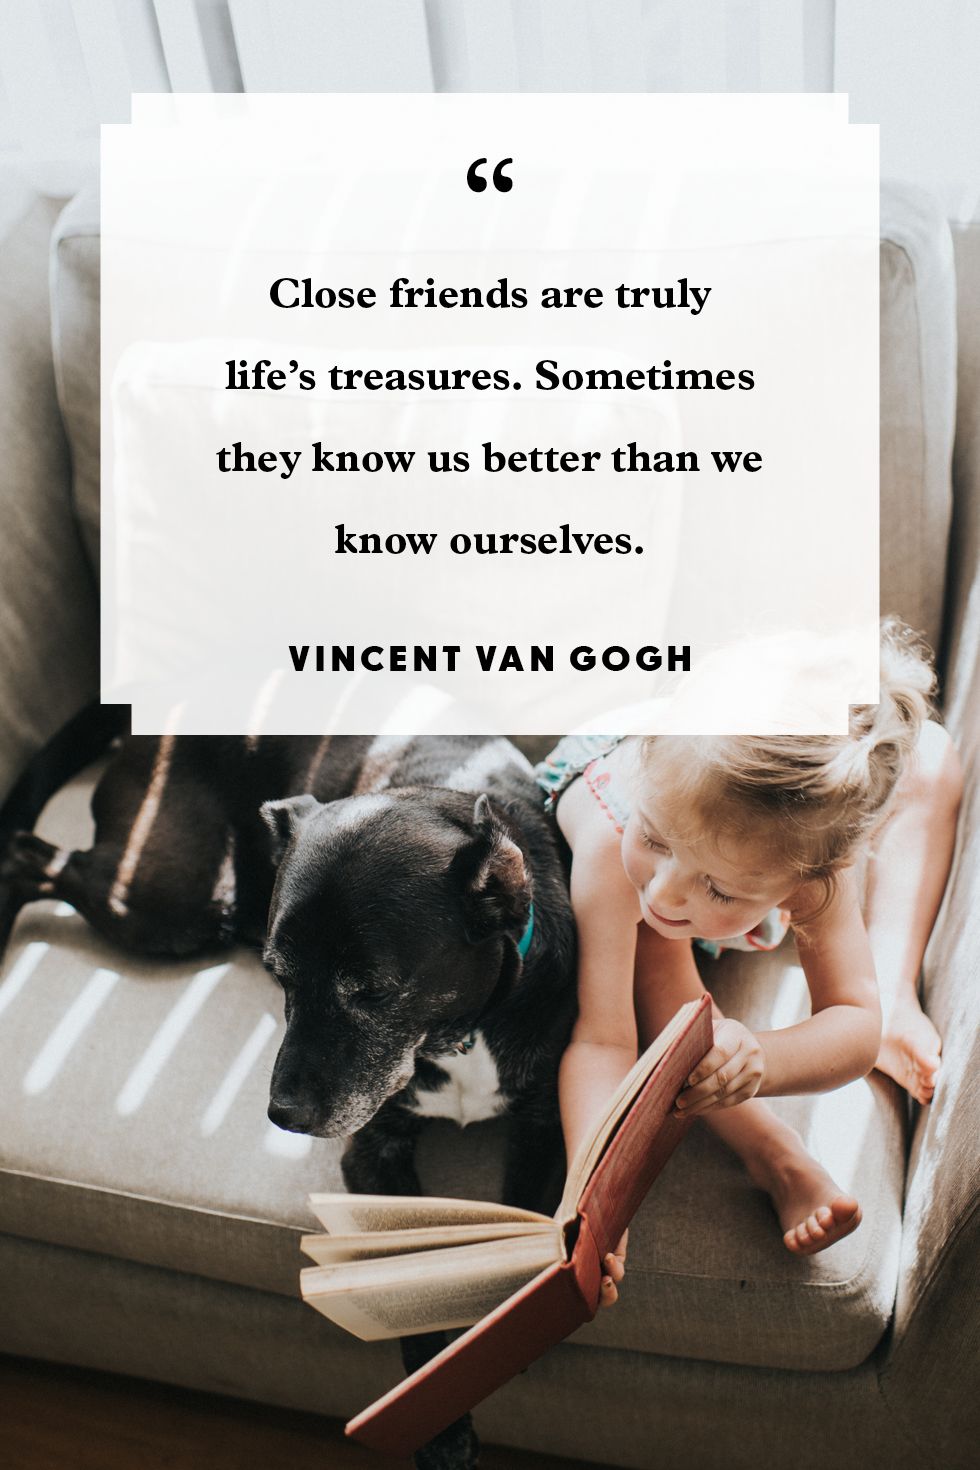 quotes true friendship